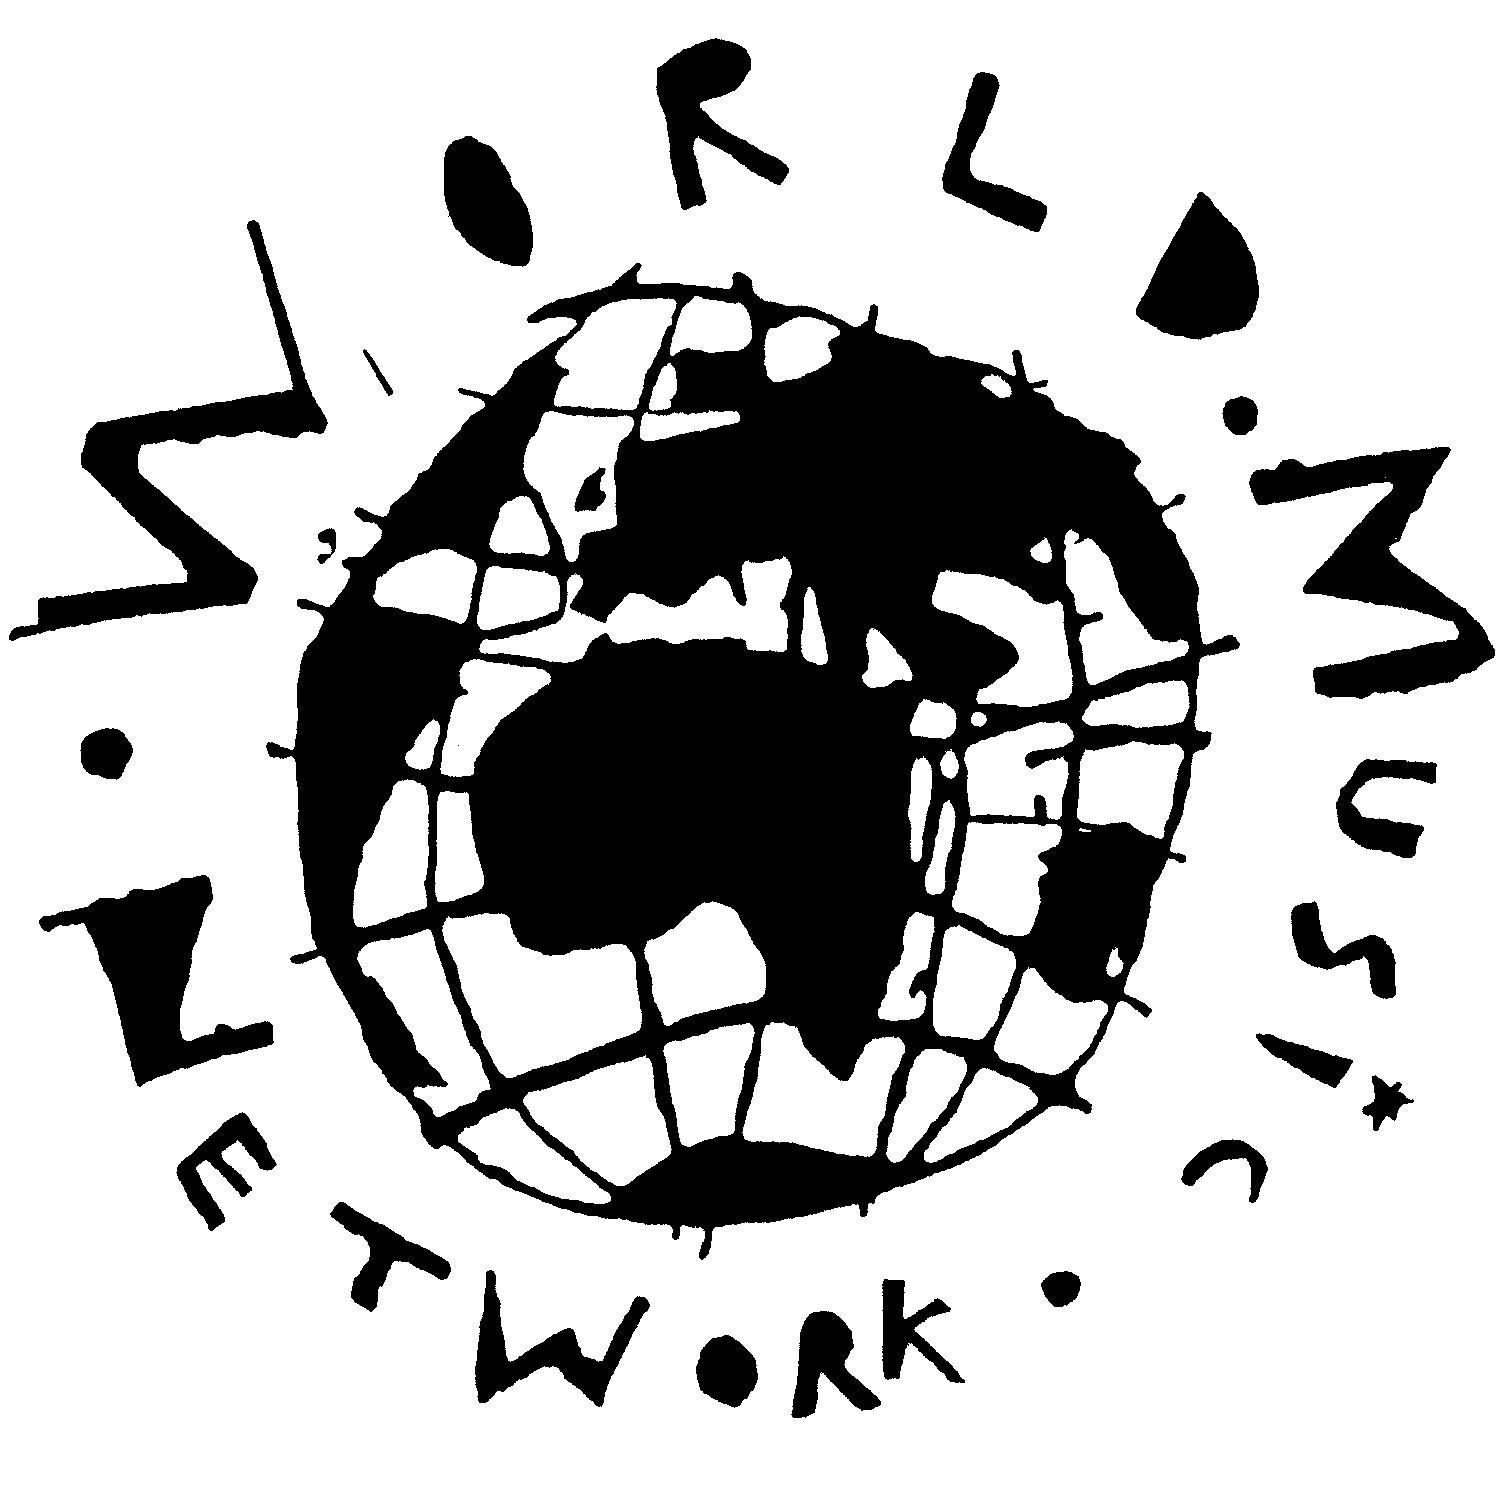 World Music Network